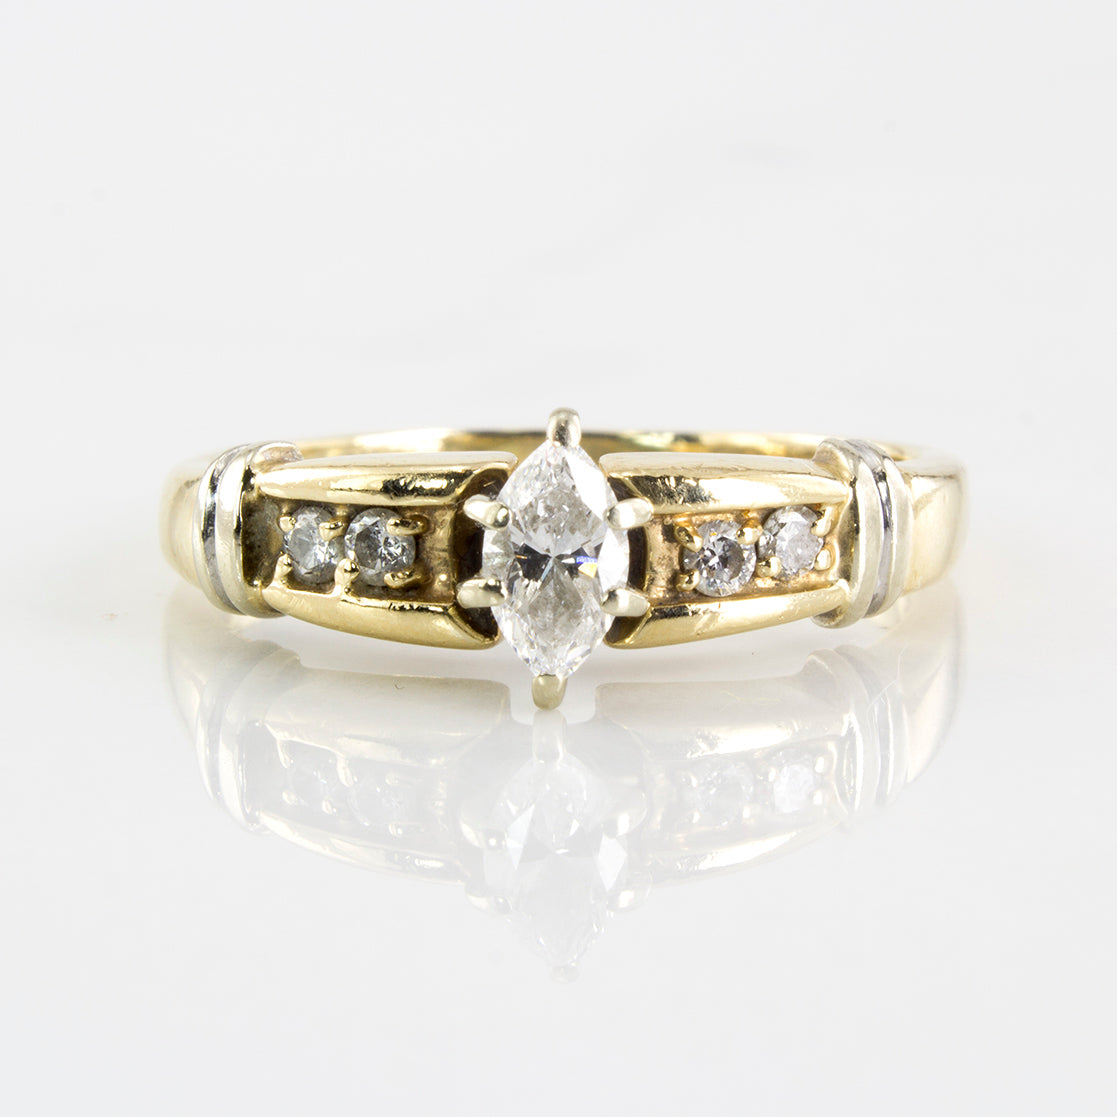 Marquise Cut Diamond Engagement Ring | 0.37 ctw | SZ 7.5 |